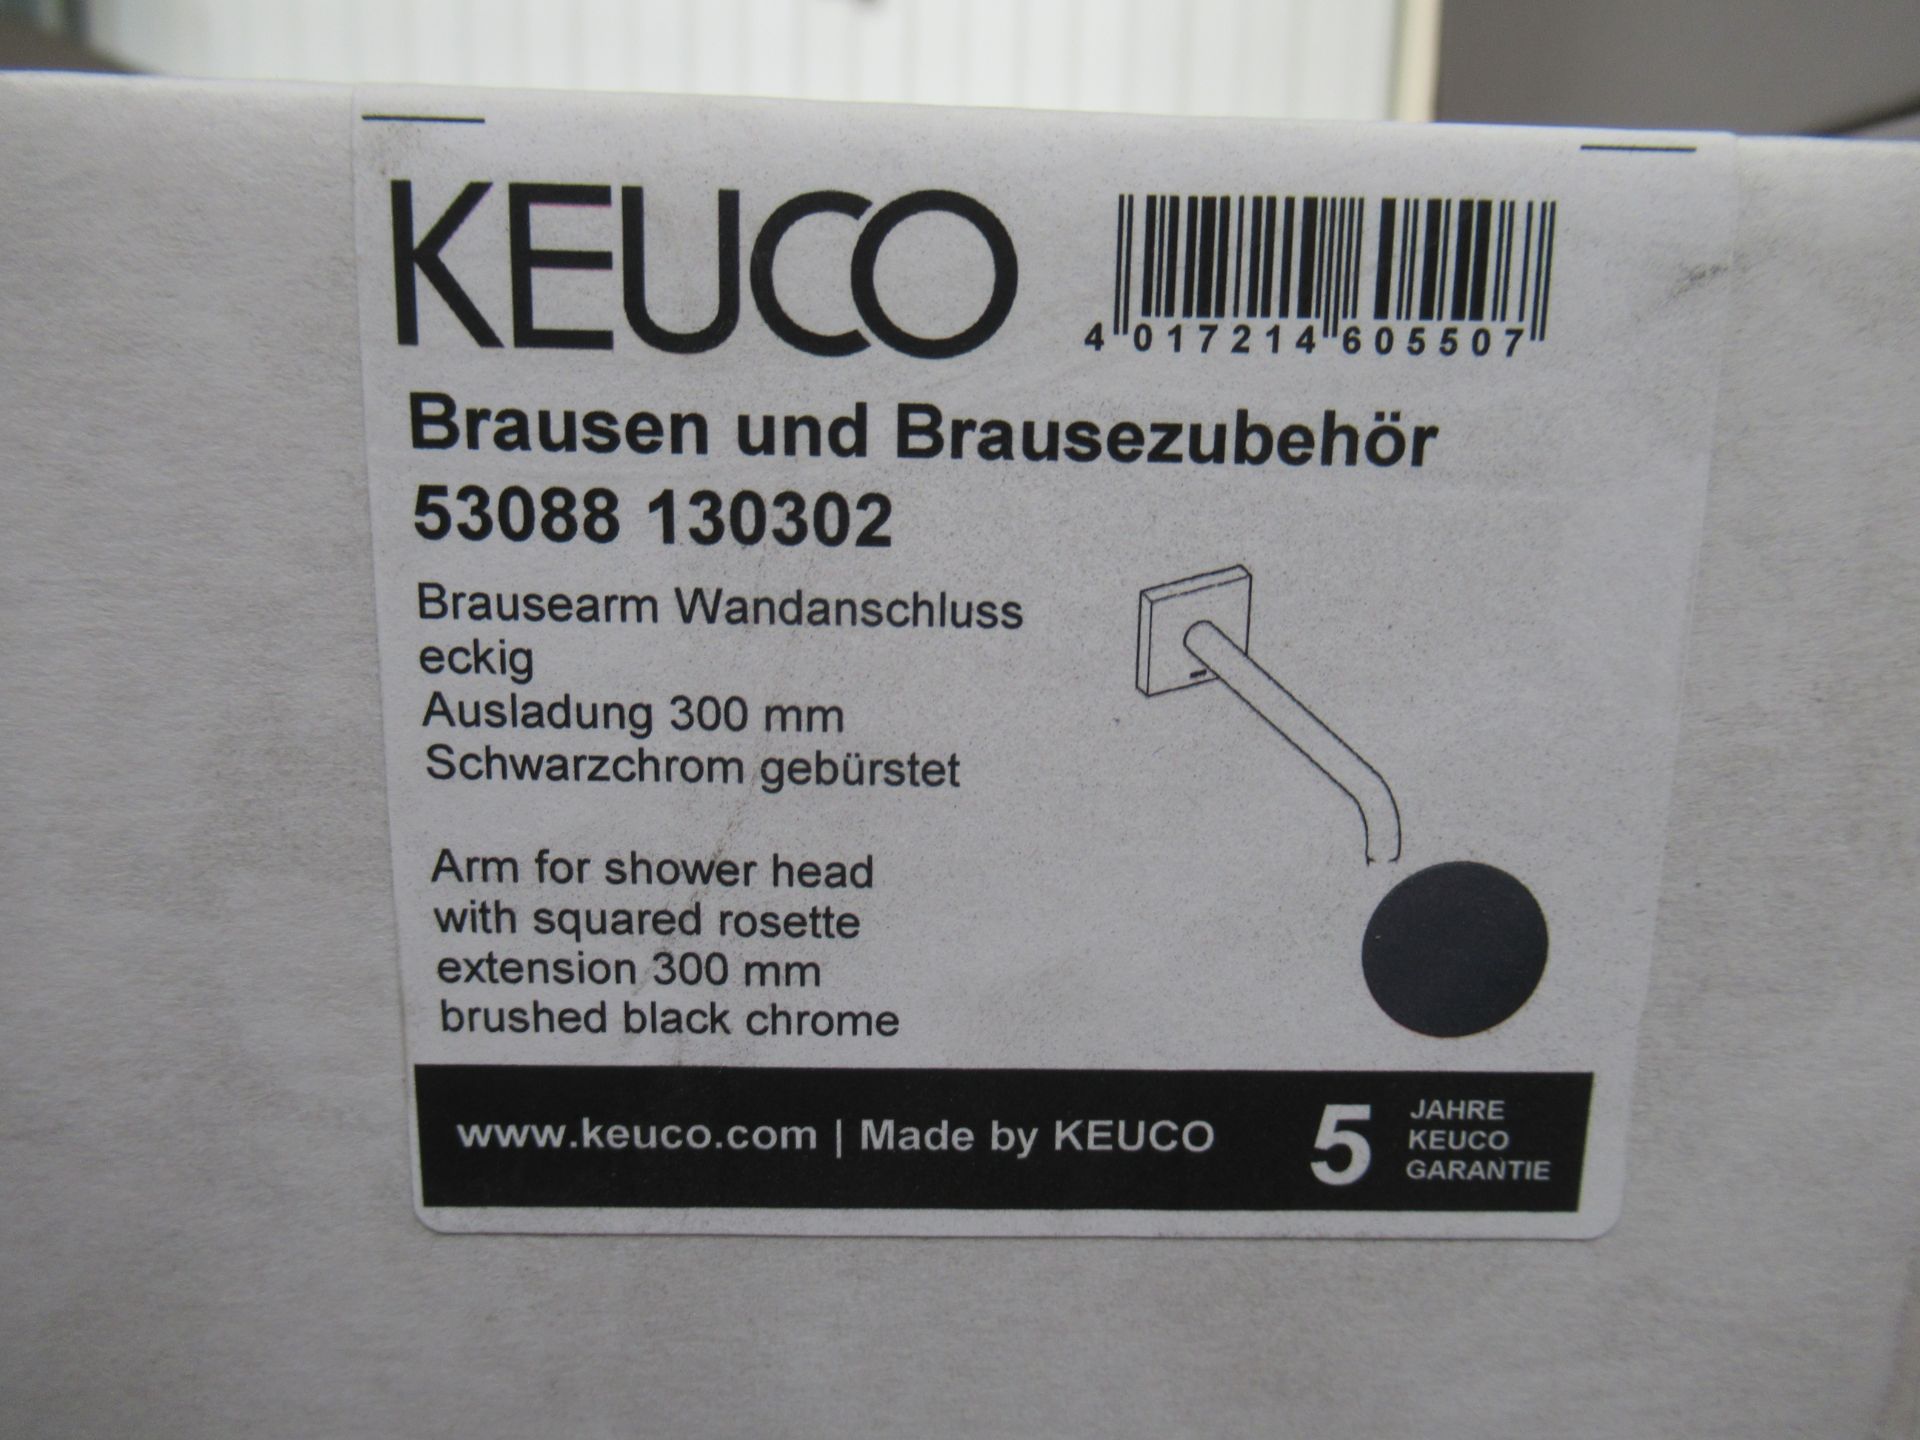 2 x Keuco Arm for Shower Head, Brushed Black Chrome, P/N 53088-130302 - Image 2 of 2